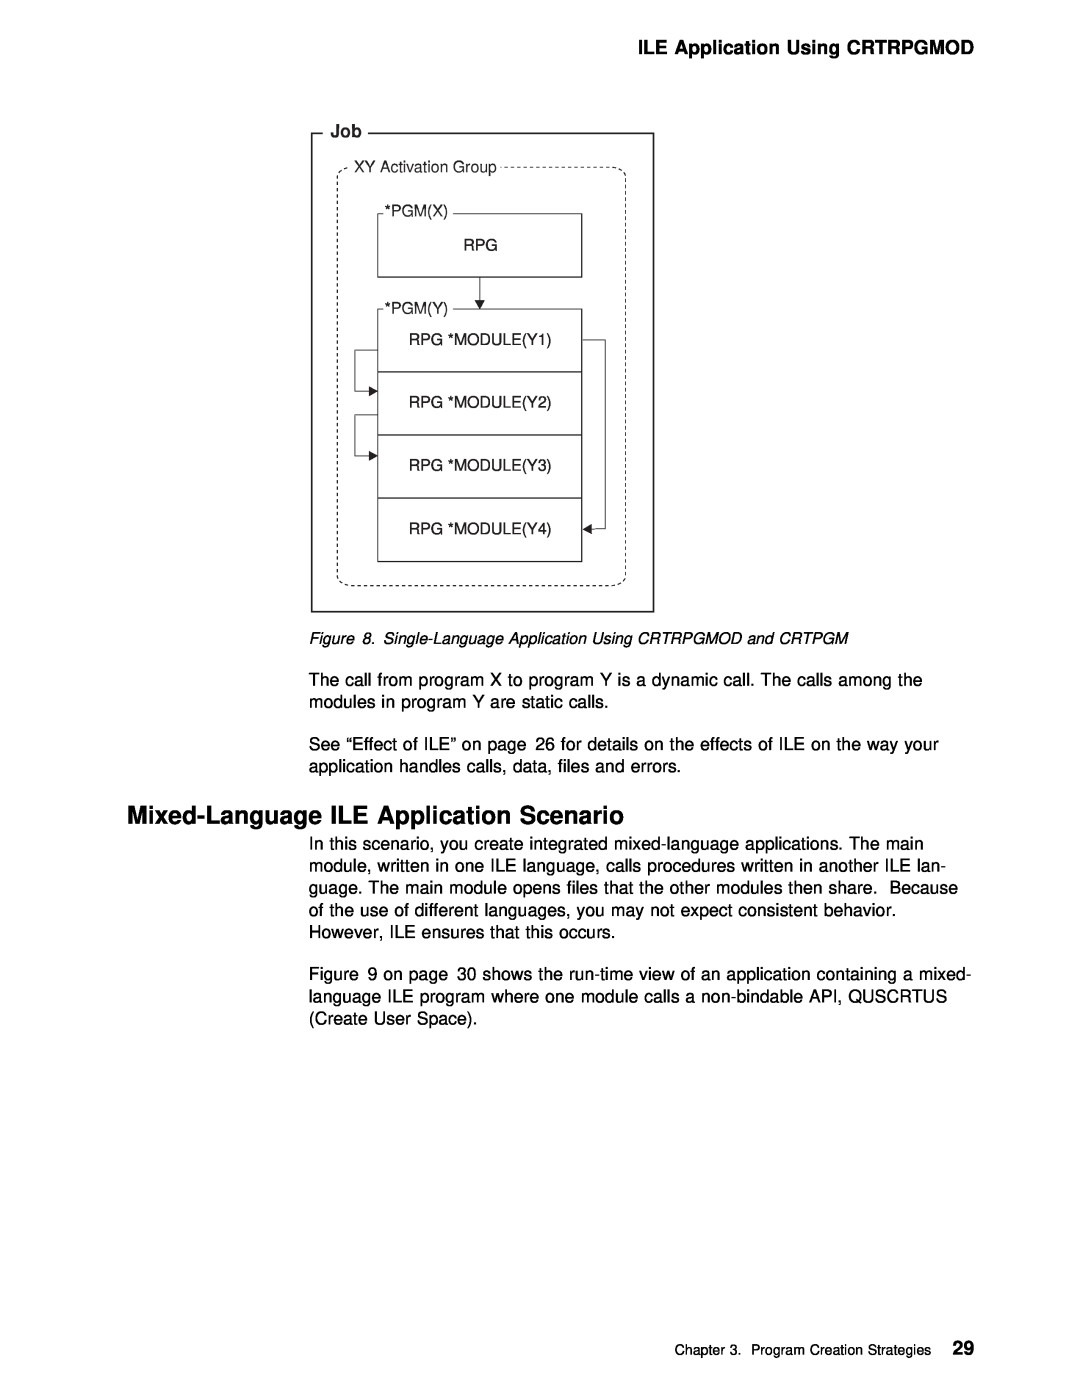 IBM AS/400 manual Mixed-Language ILE Application Scenario, ILE Application Using CRTRPGMOD 